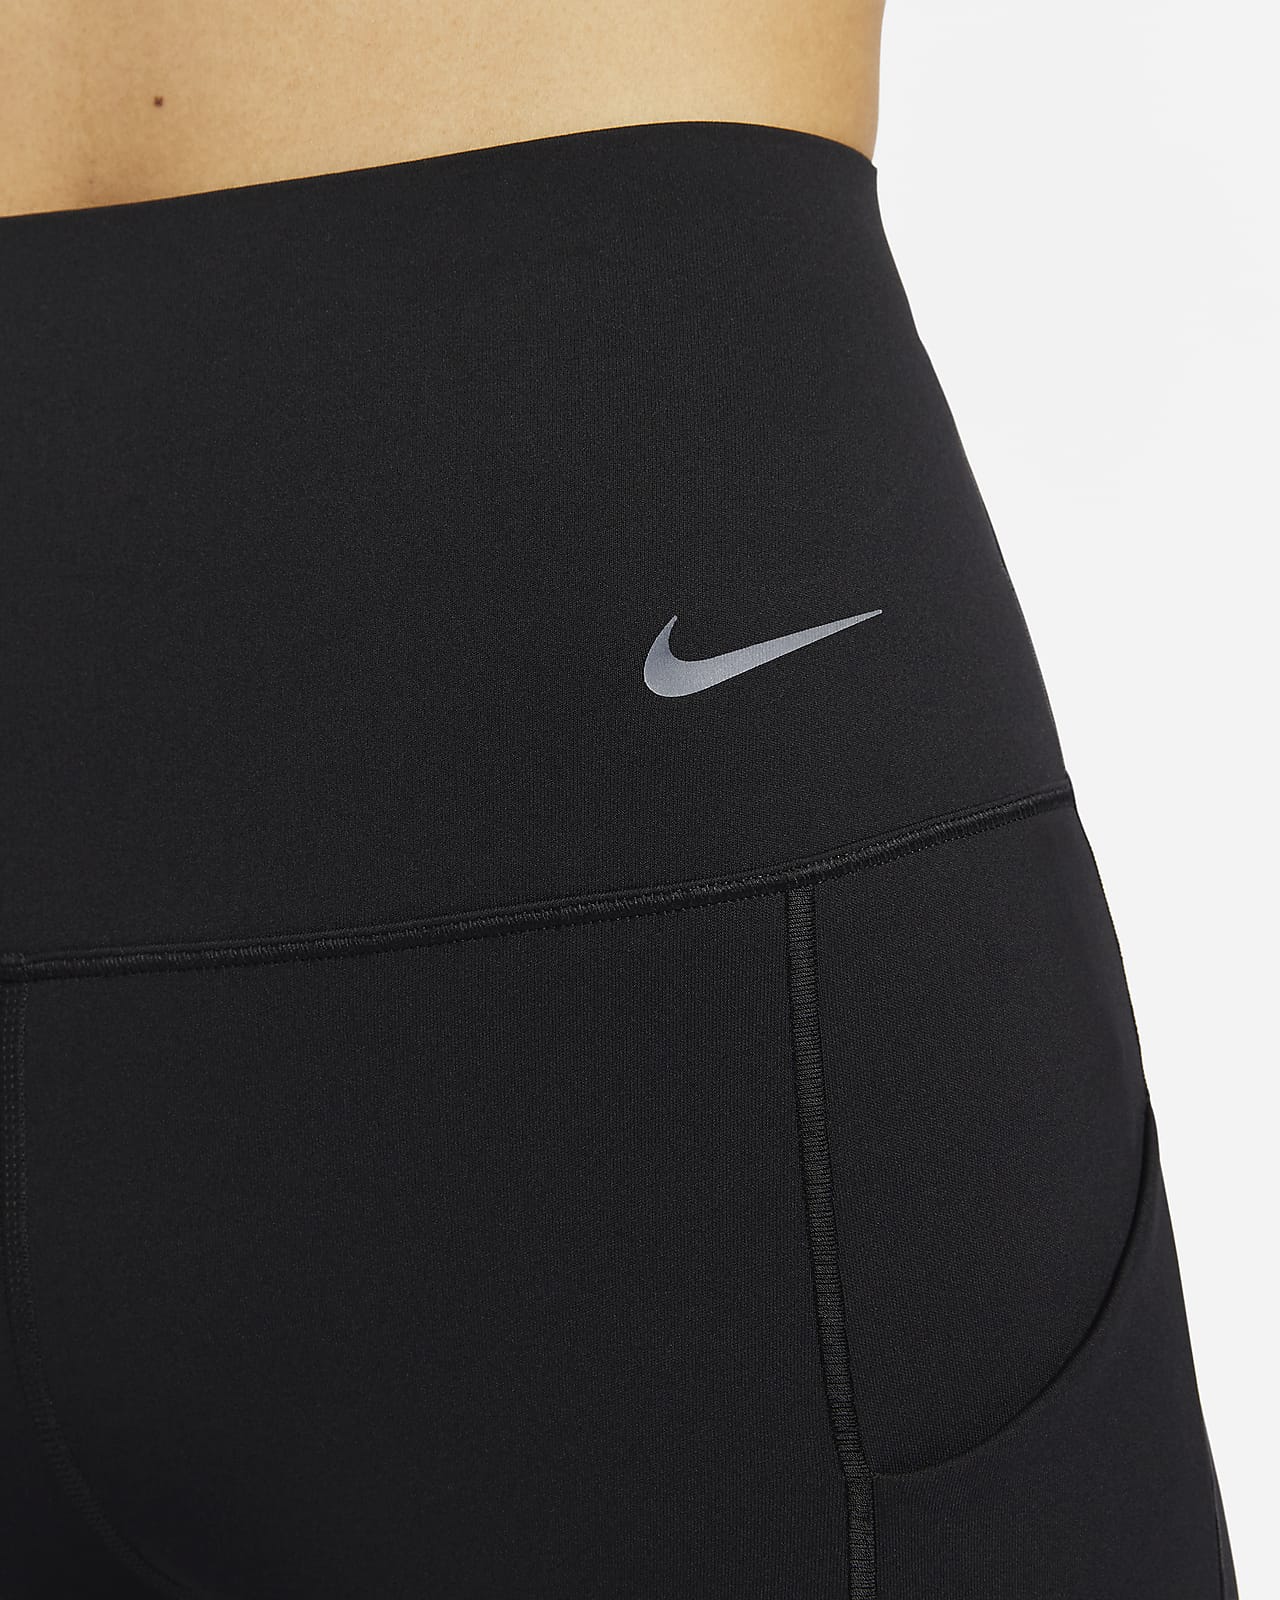 Nike Dri-FIT Running Calf Sleeves Size M Black One Pair